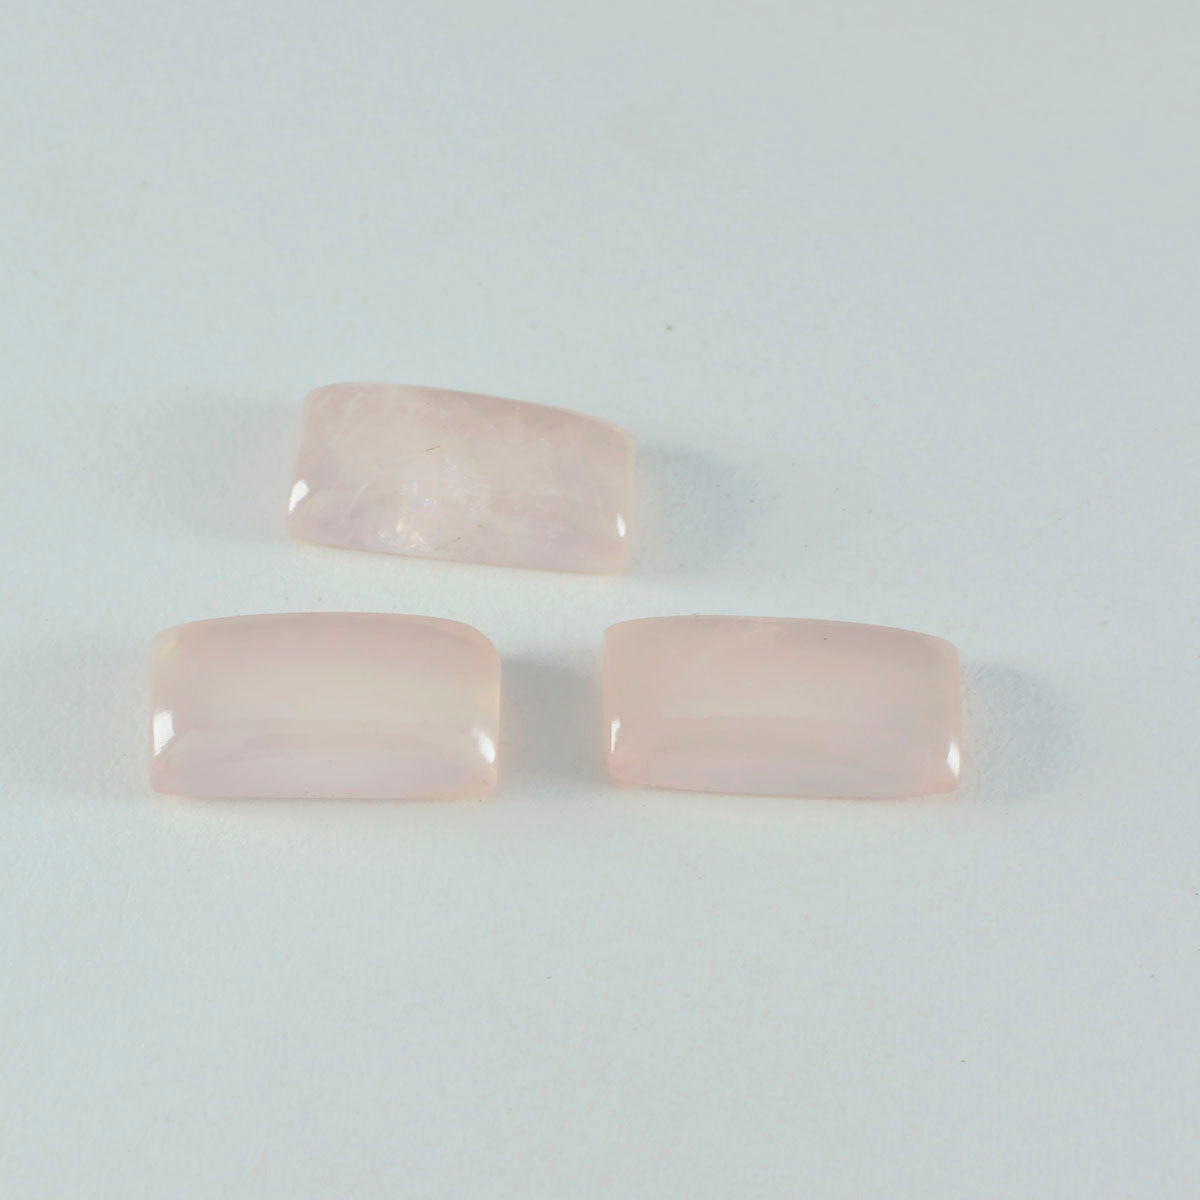 riyogems 1 шт. кабошон из розового кварца 7x14 мм в форме багета, качественный свободный камень